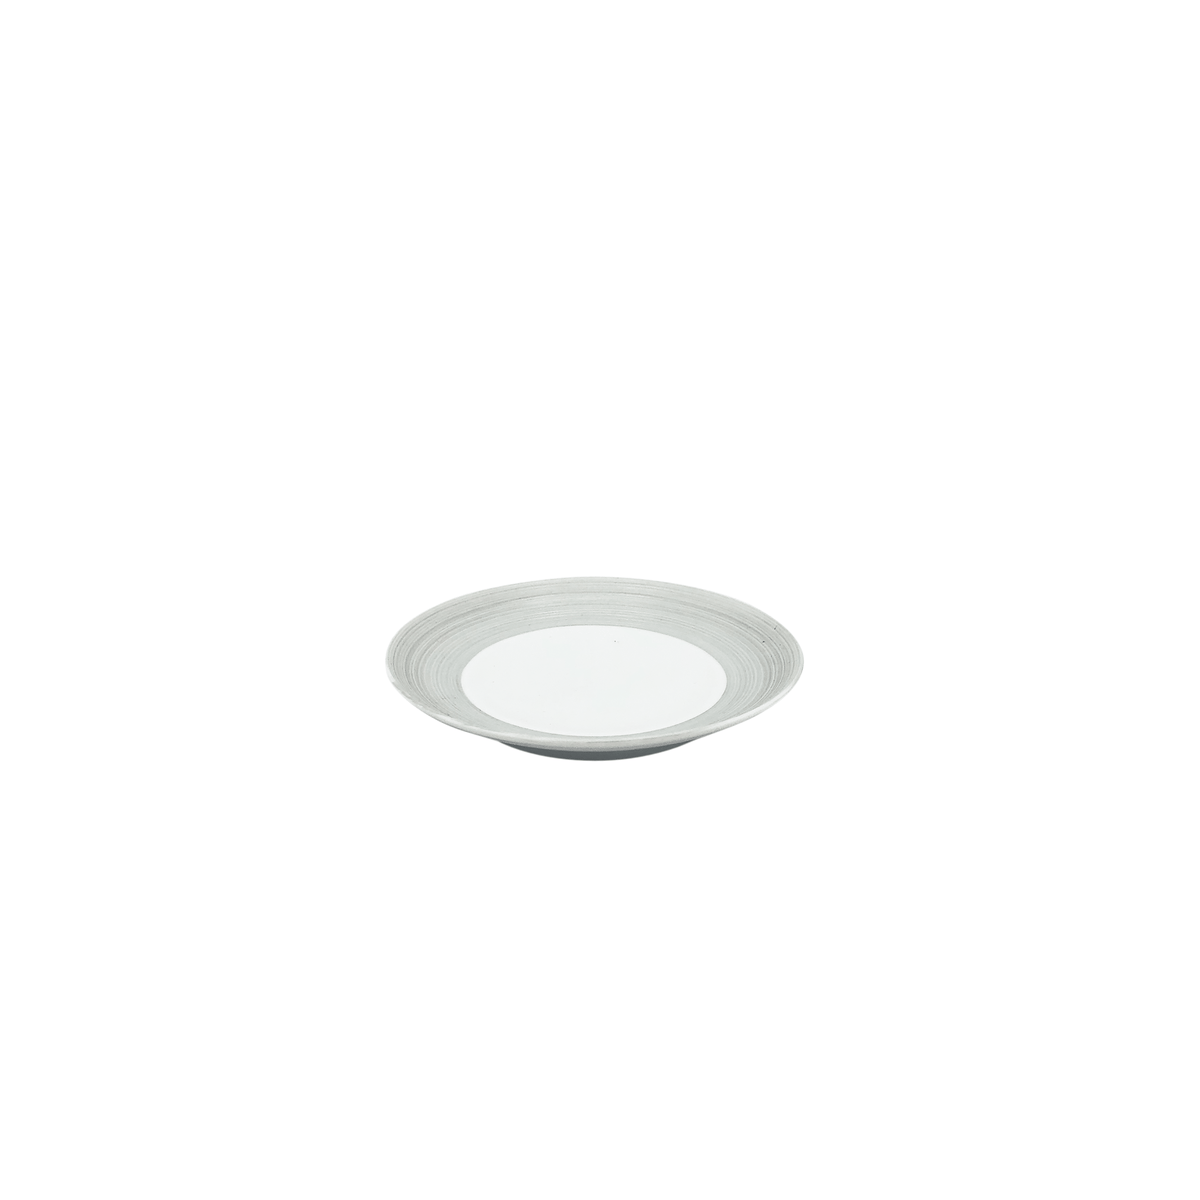 HEMISPHERE Grey - 10 Asian plate